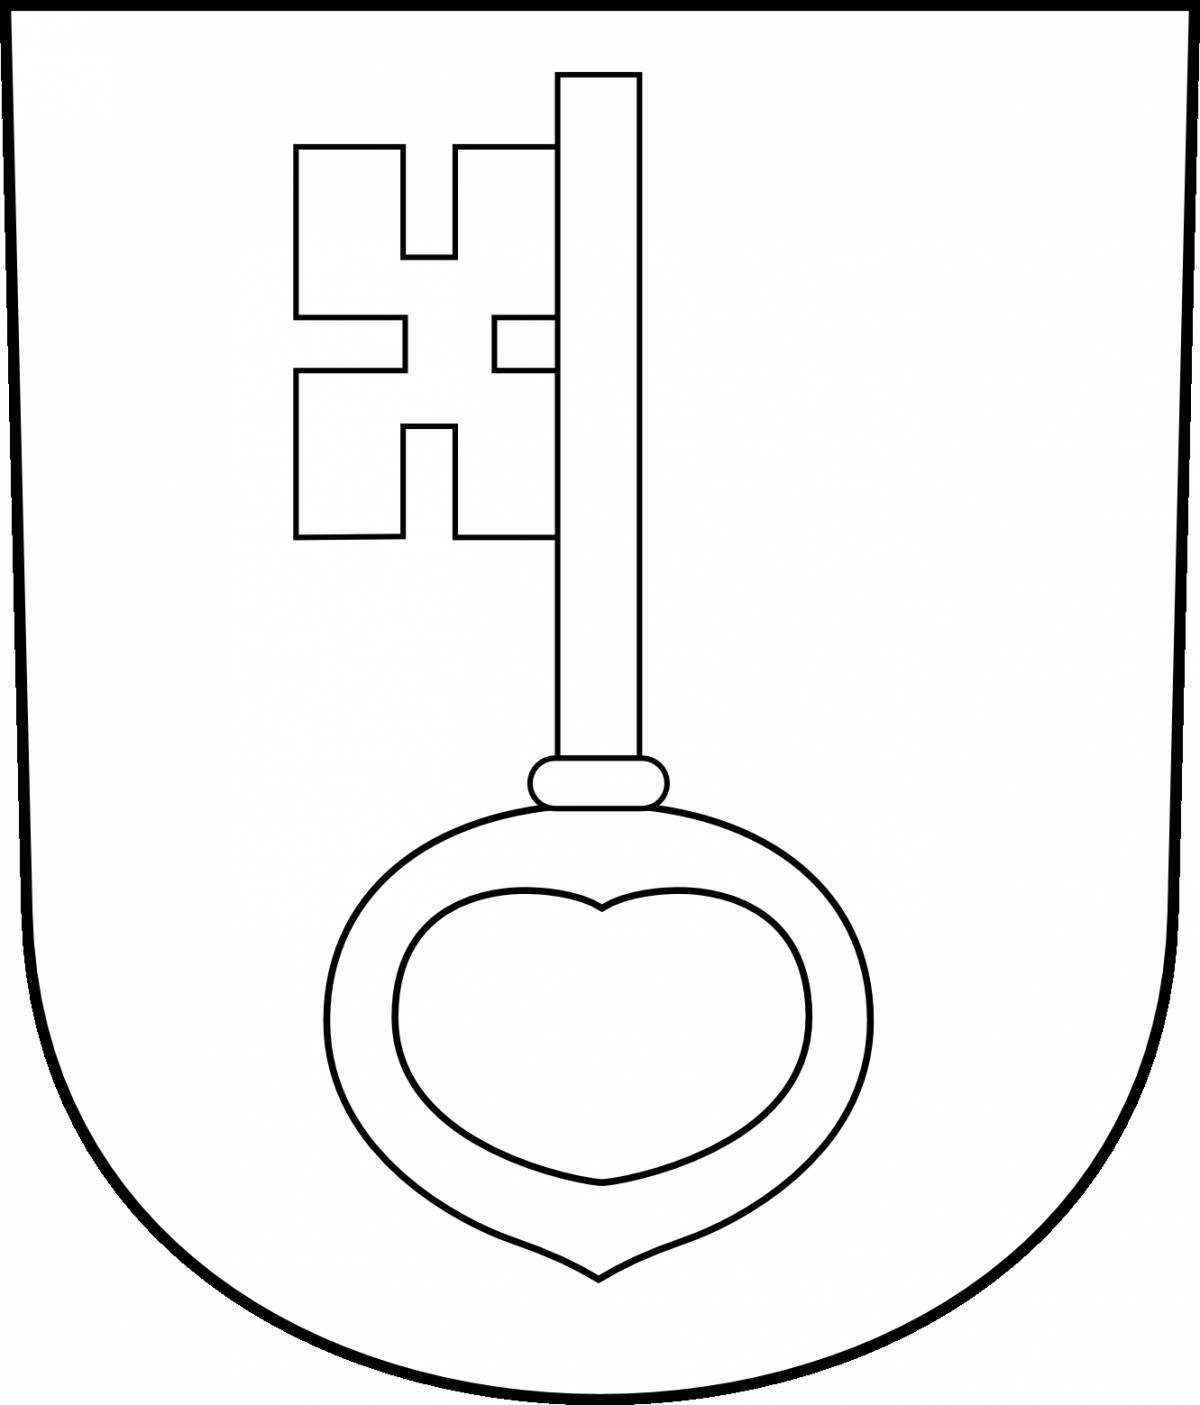 Exalted раскраска семейный герб